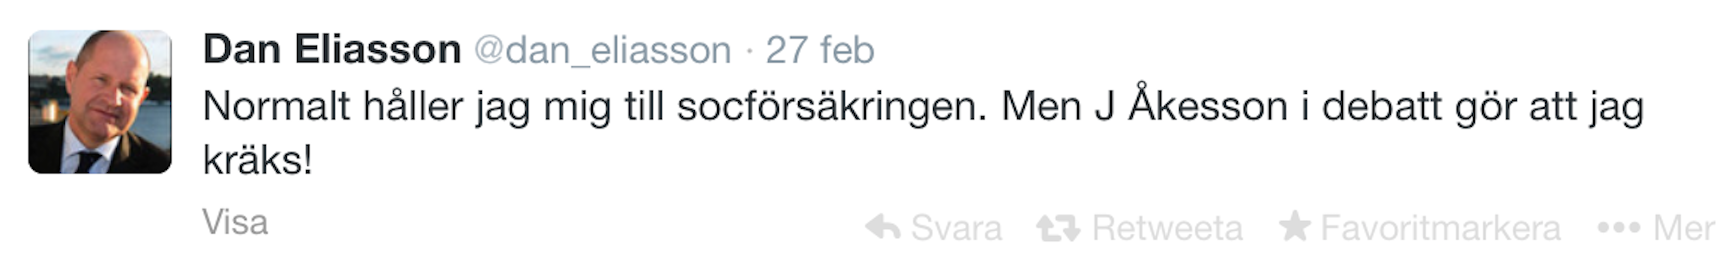 Dan Eliasson om Jimmie Åkesson 27.2 2014